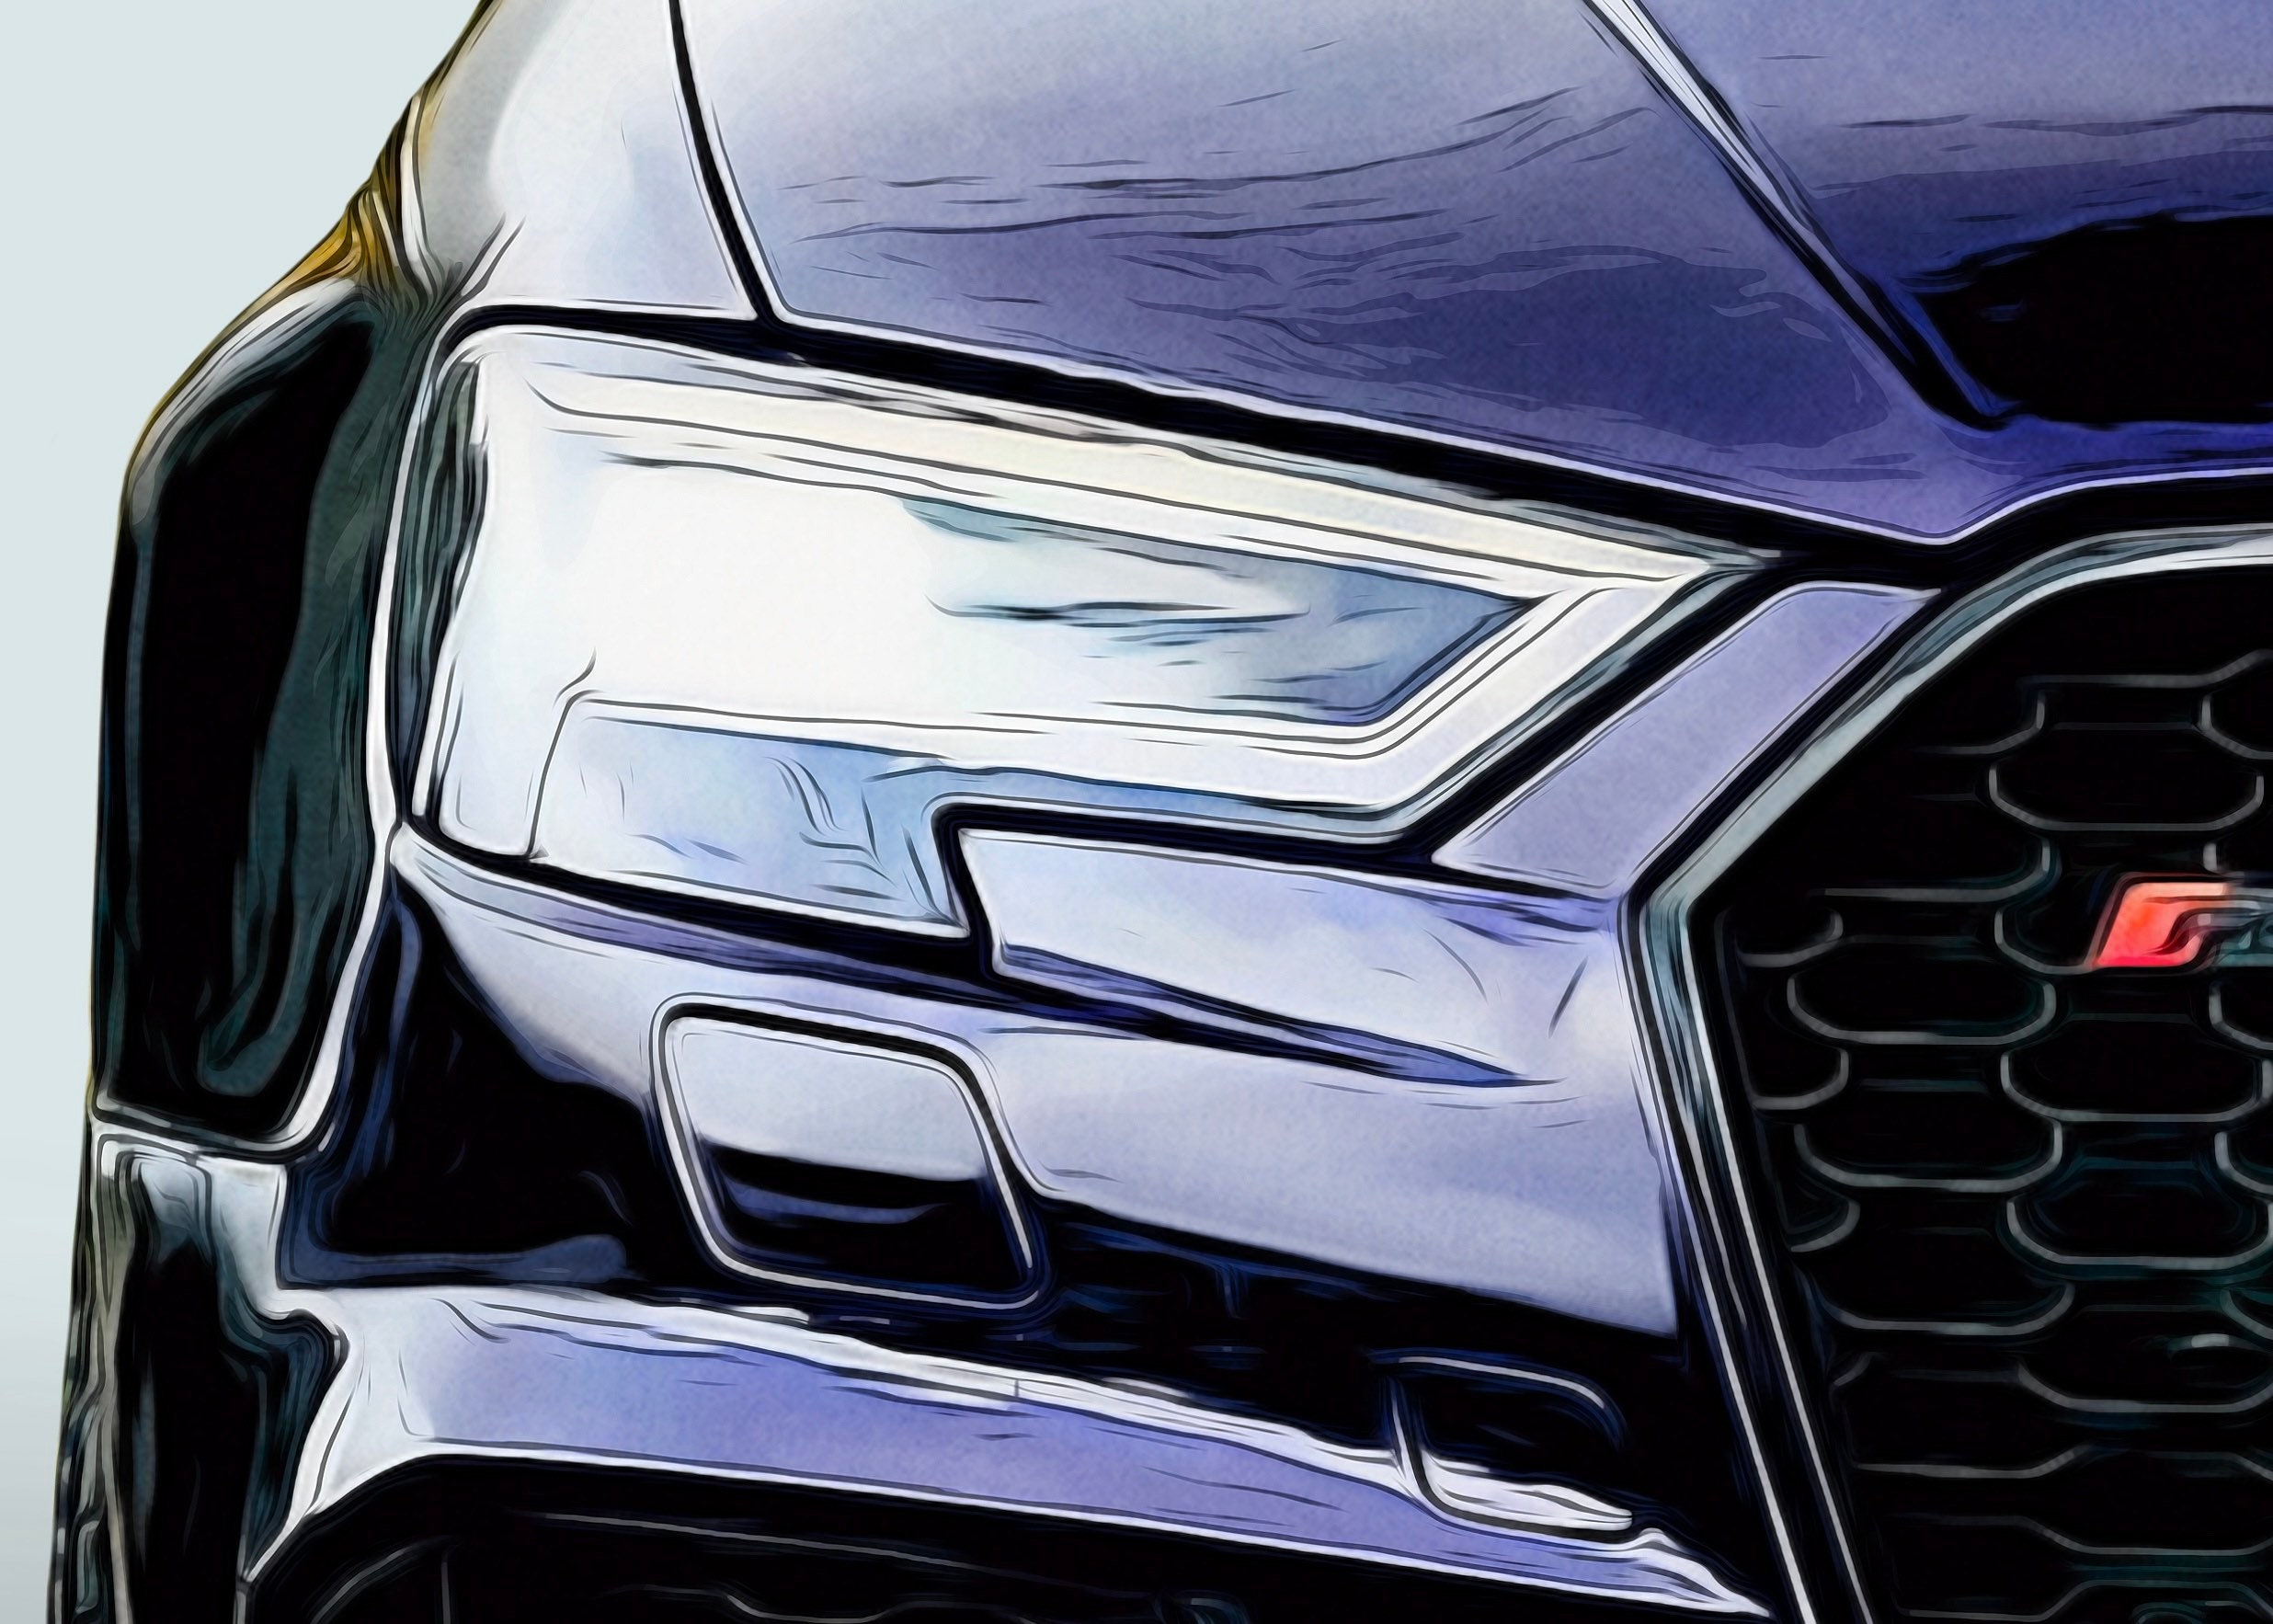 Poster Audi Rs3 Sedan Duvet Cover by Interlakes - Pixels